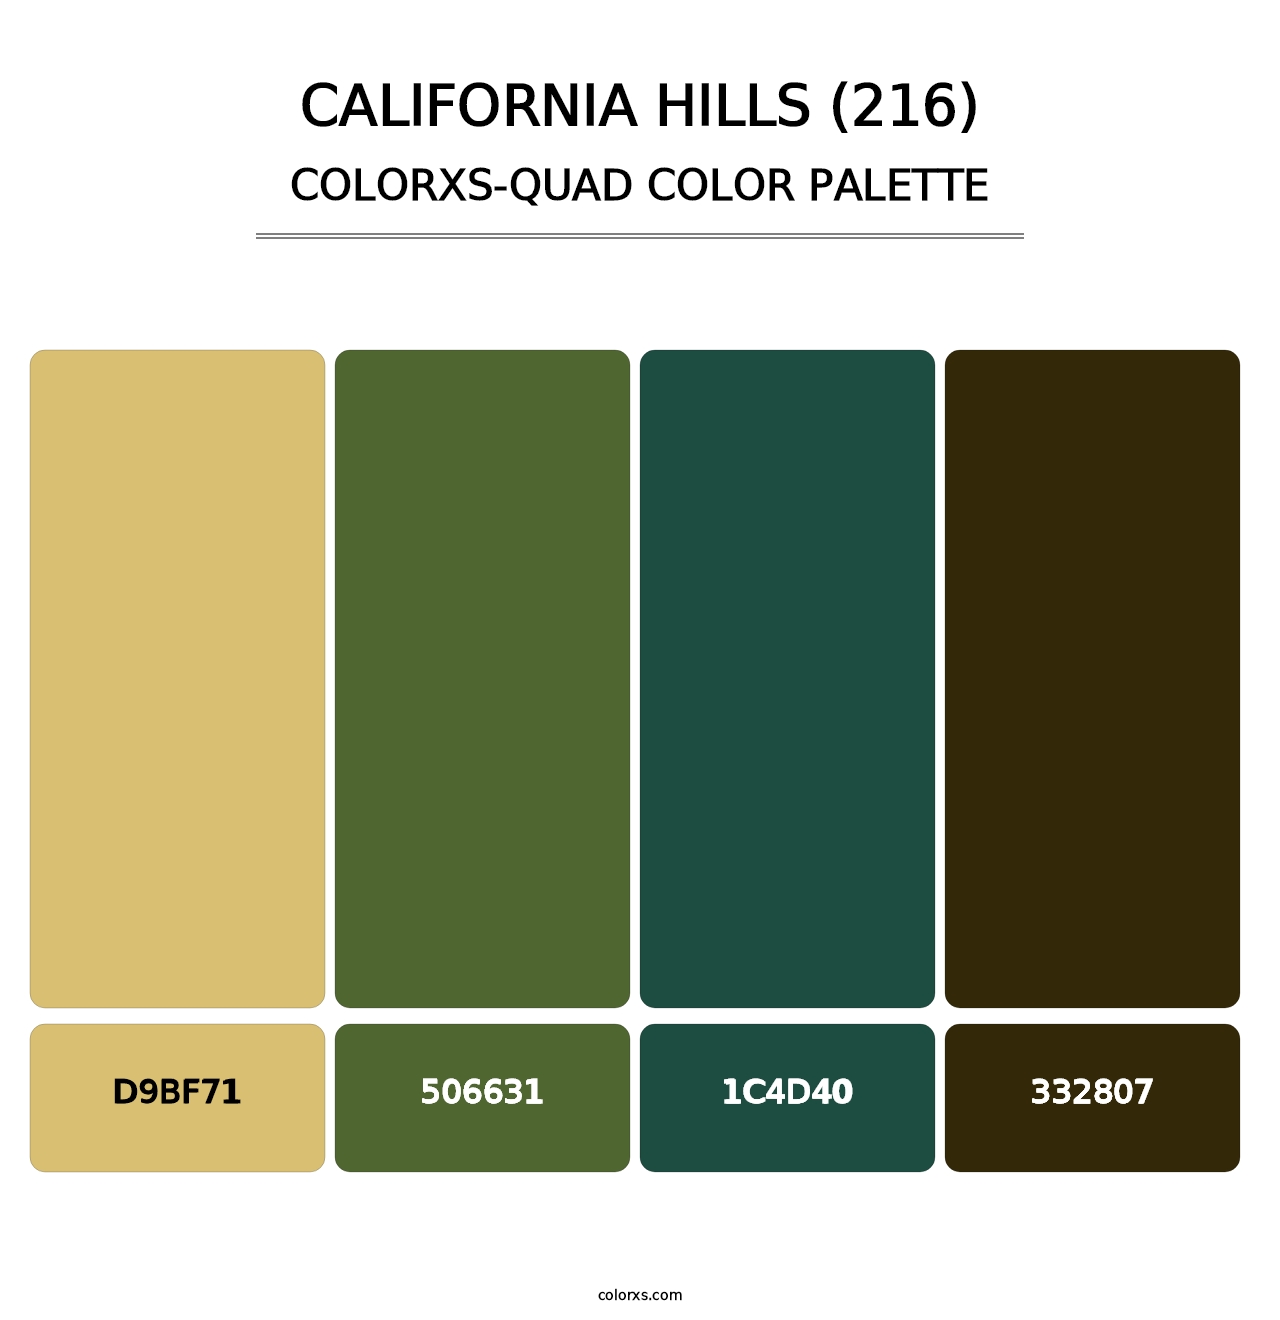 California Hills (216) - Colorxs Quad Palette